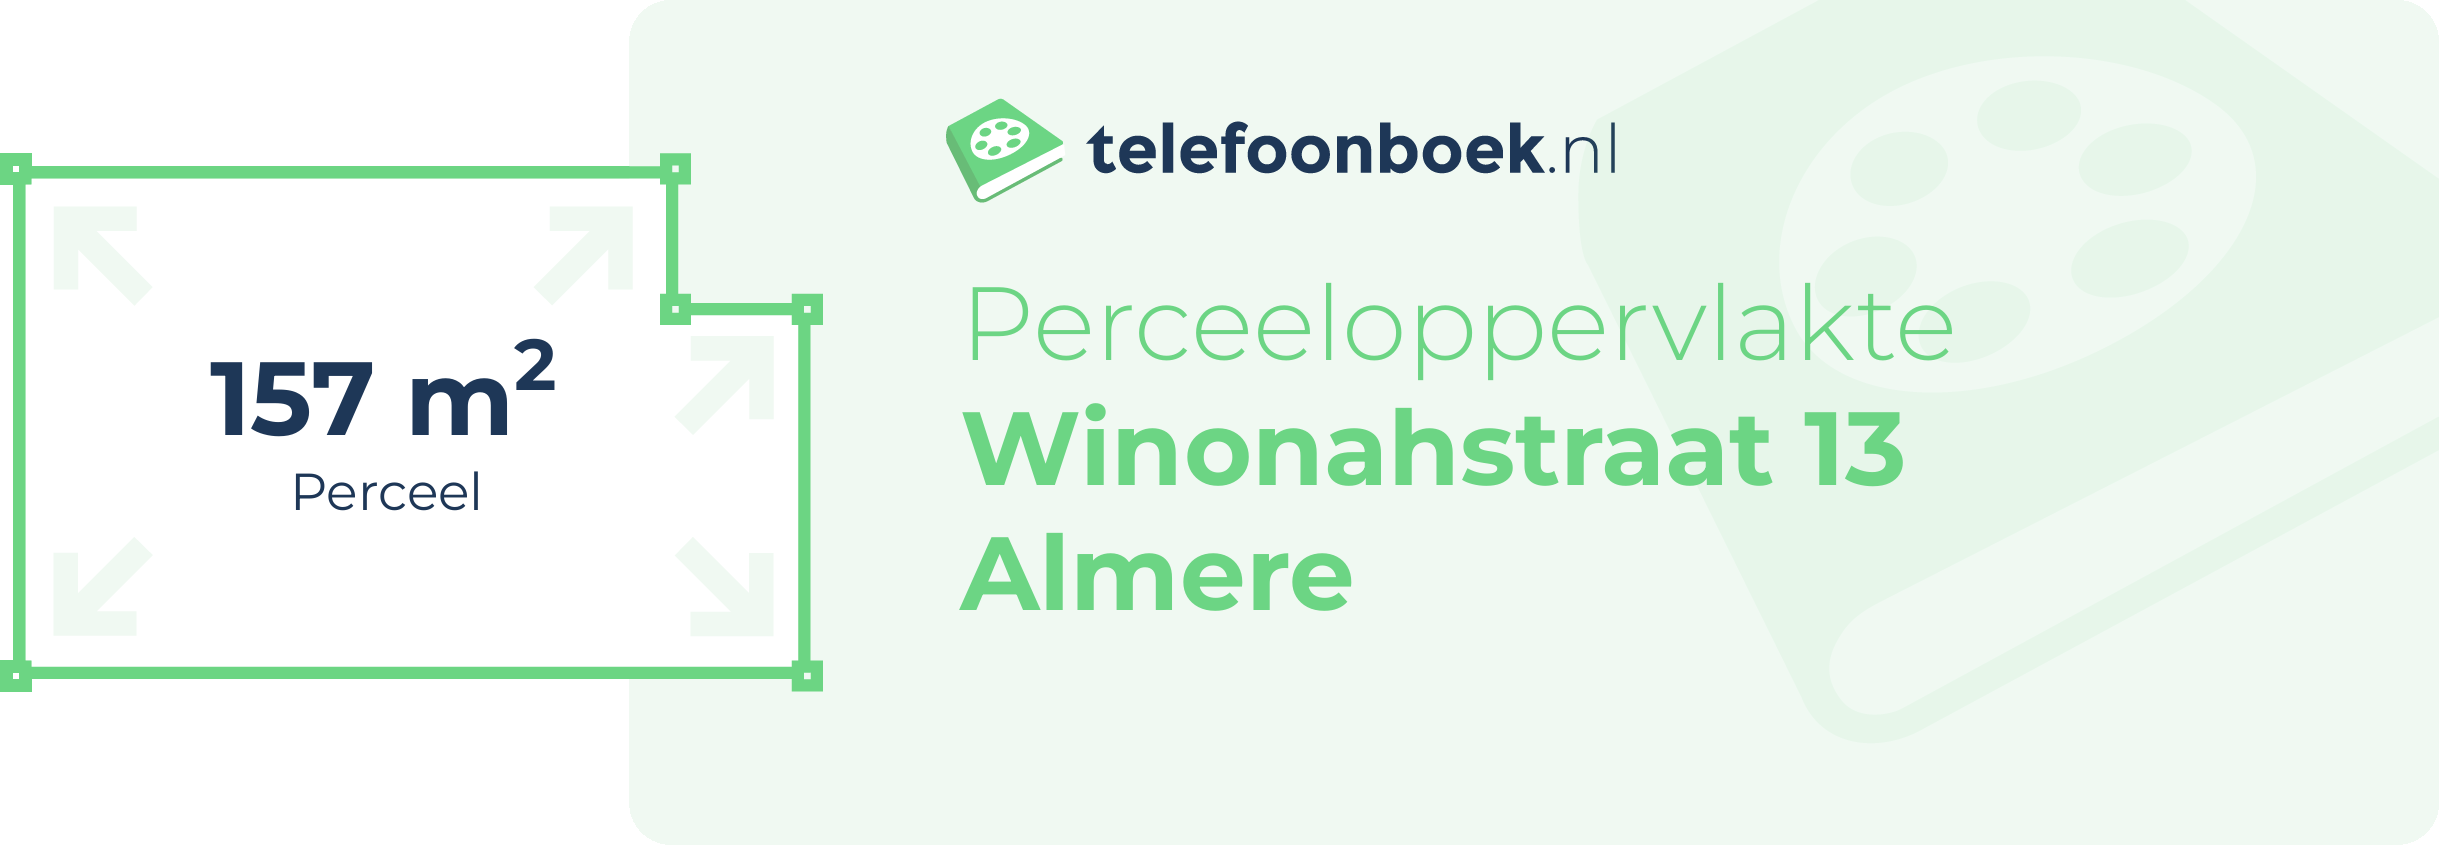 Perceeloppervlakte Winonahstraat 13 Almere